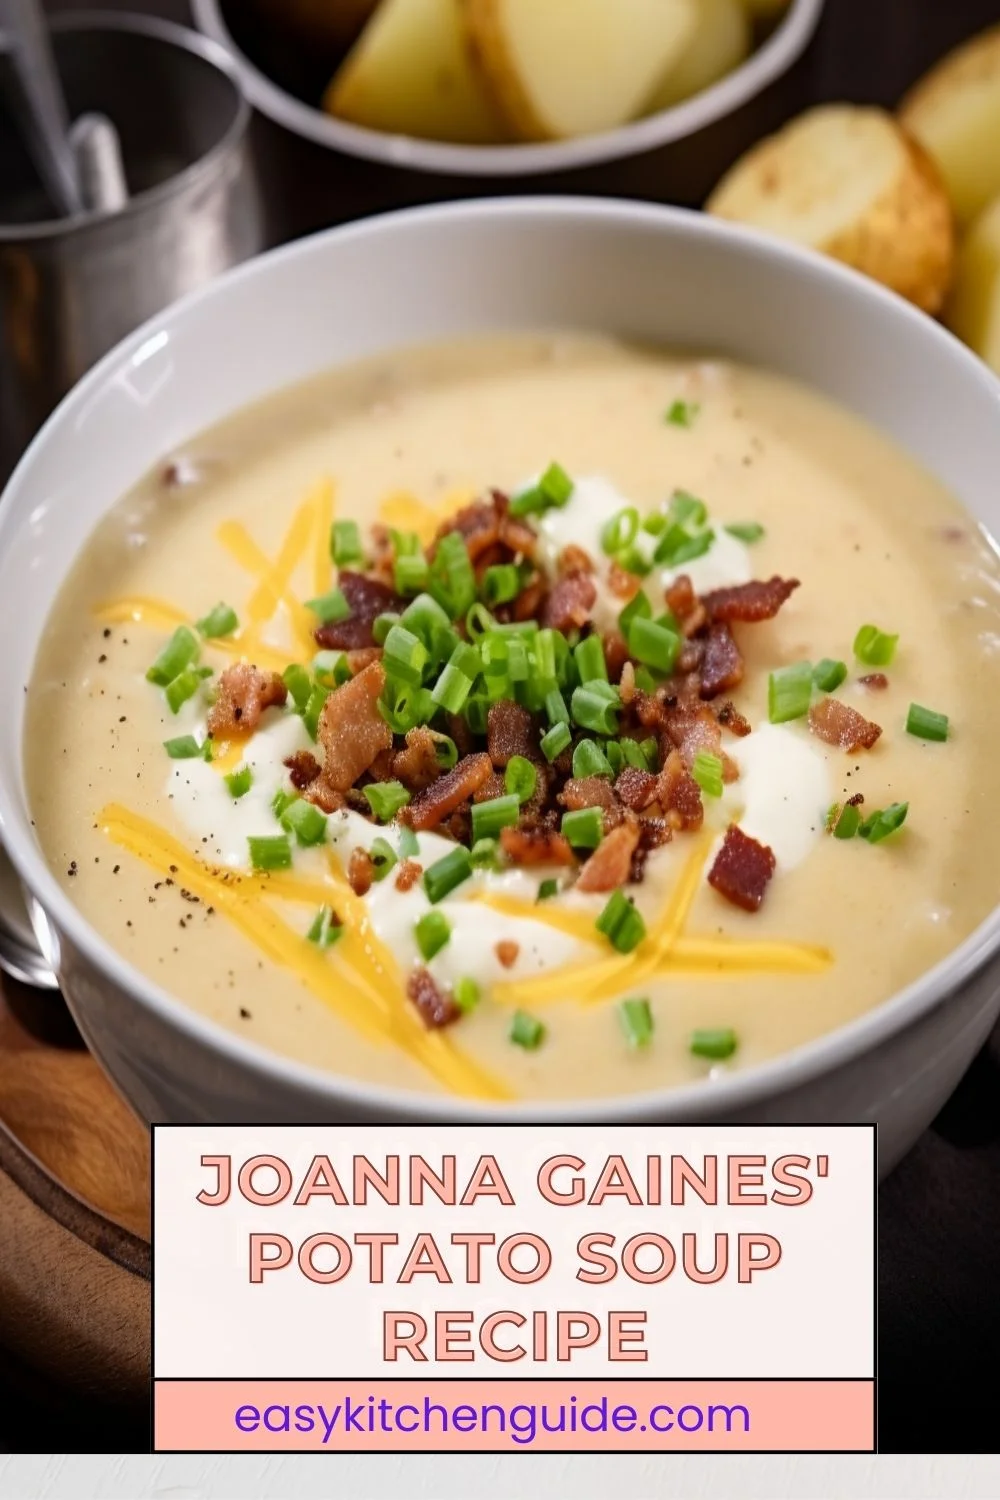 Joanna Gaines’ Potato Soup Recipe